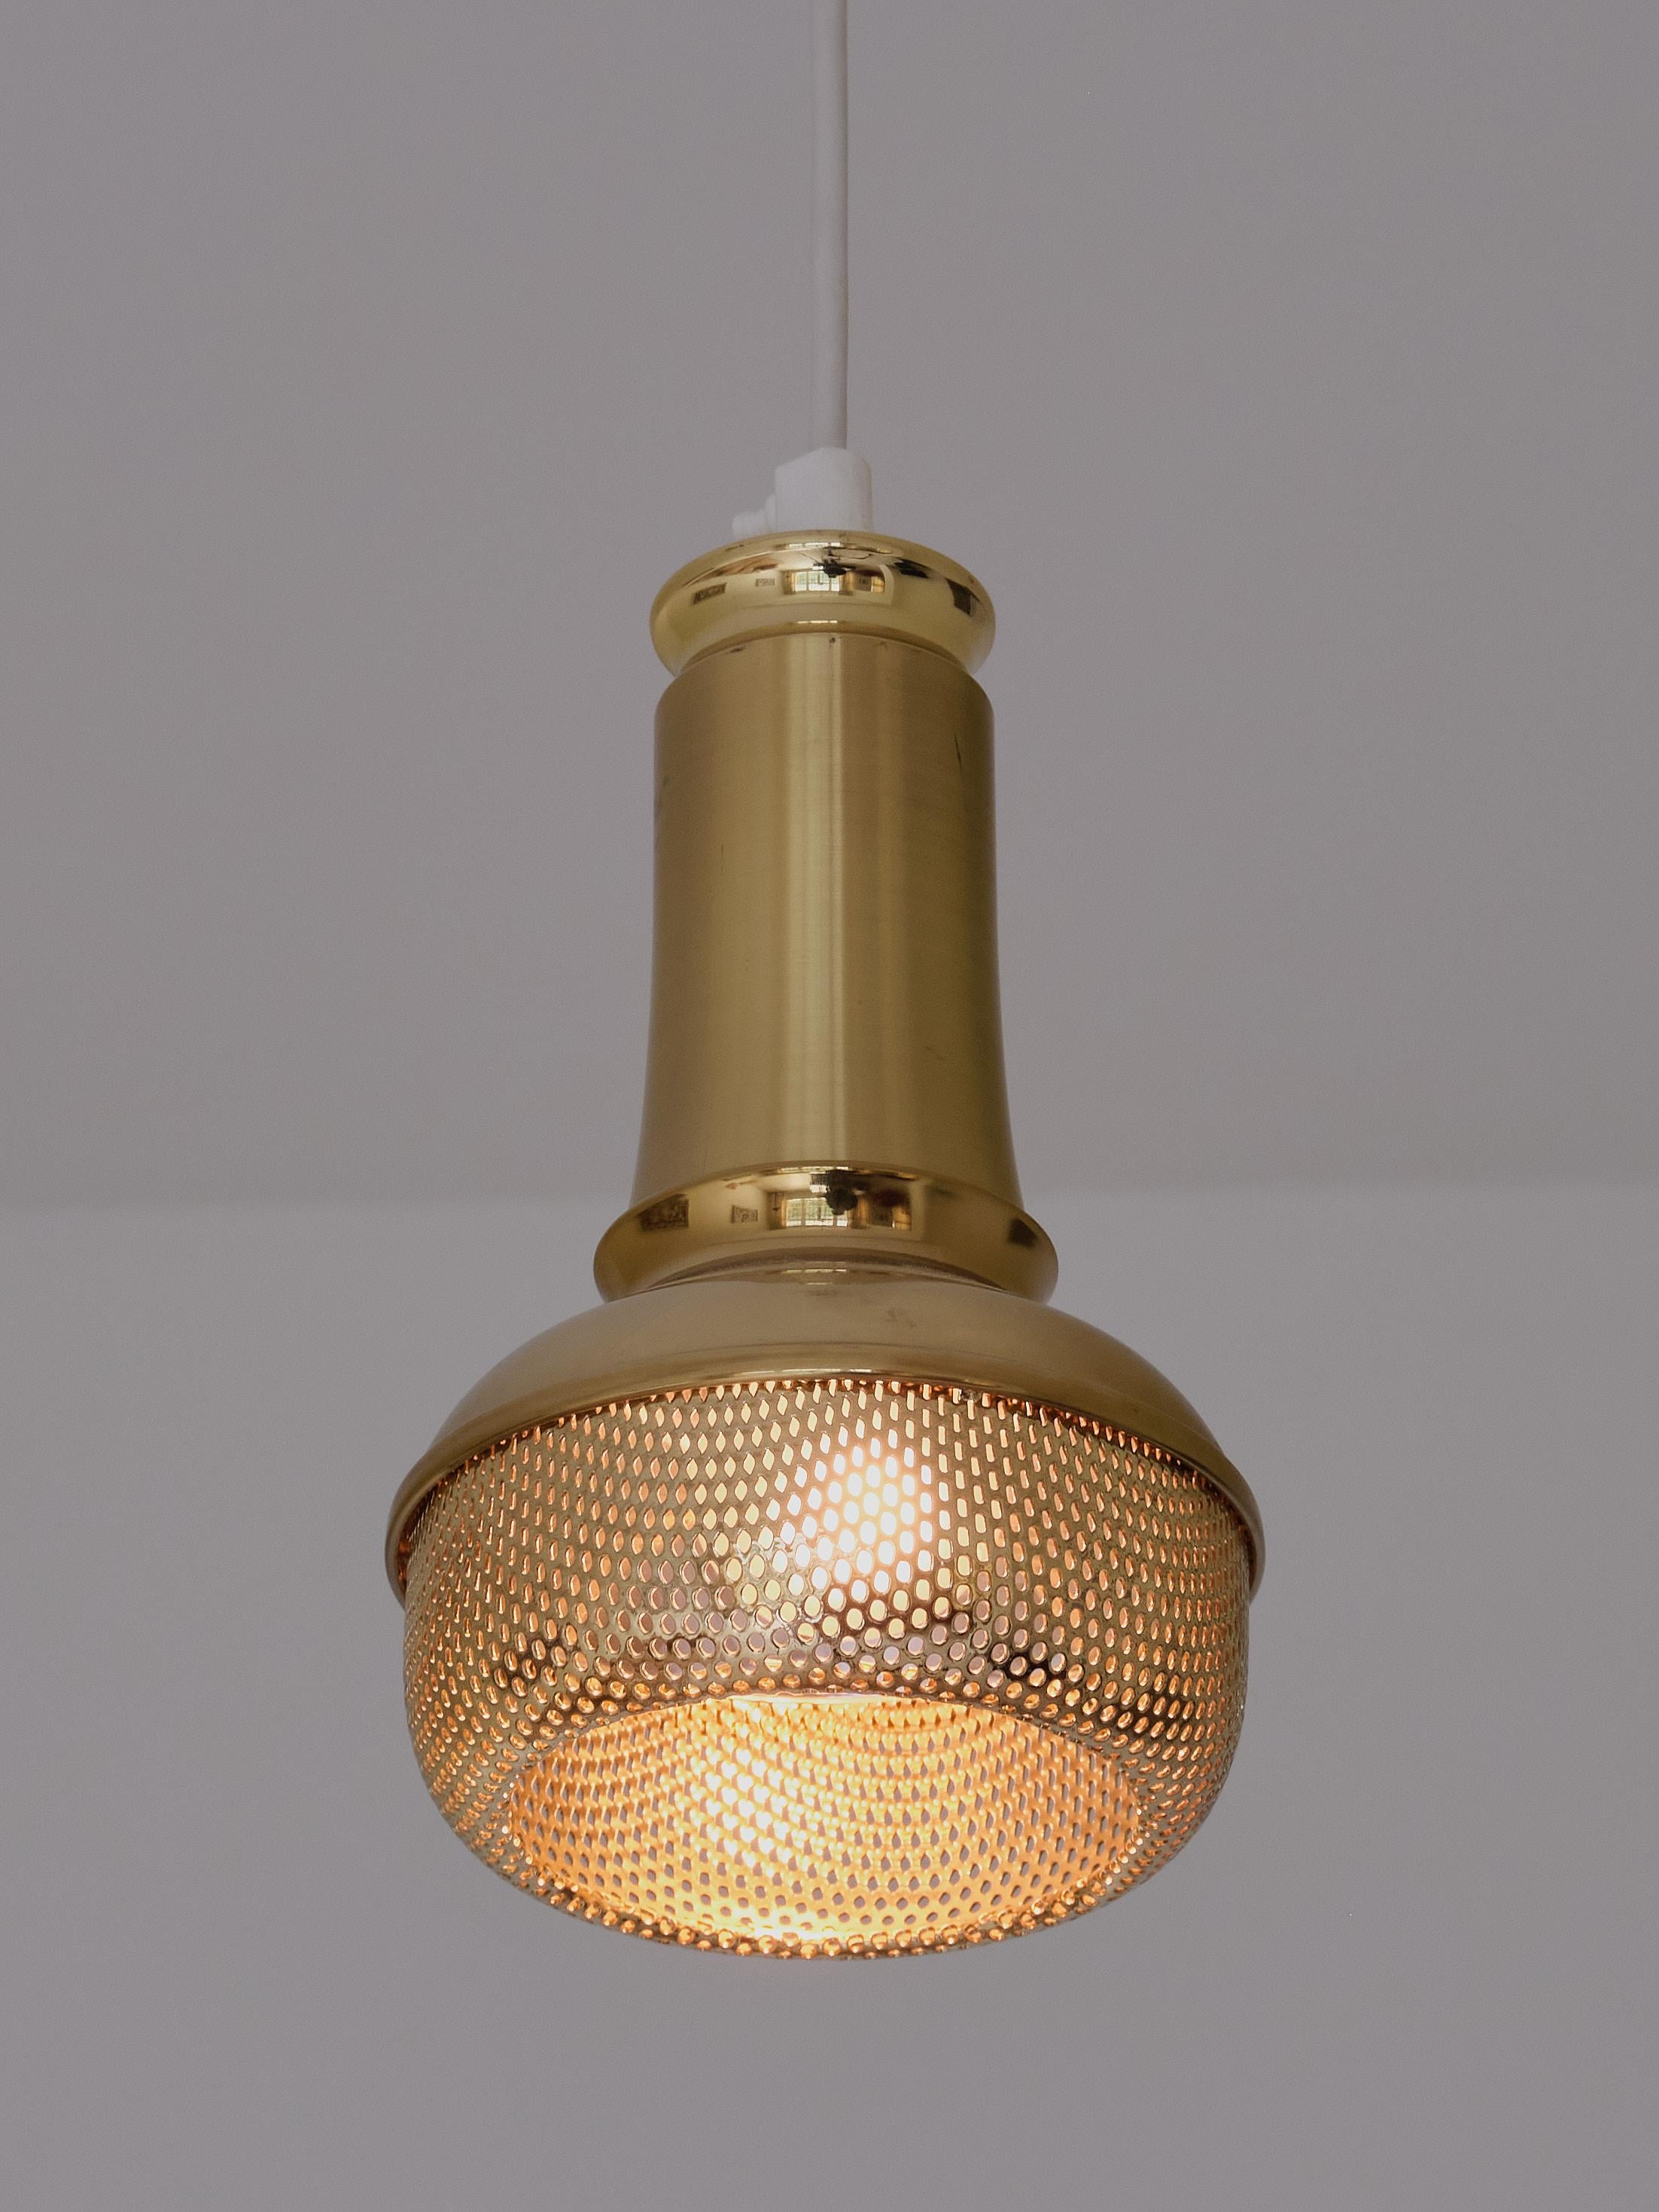 Pair of Scandinavian Modern Brass Pendant Lights, OMI Denmark, 1960s For Sale 1